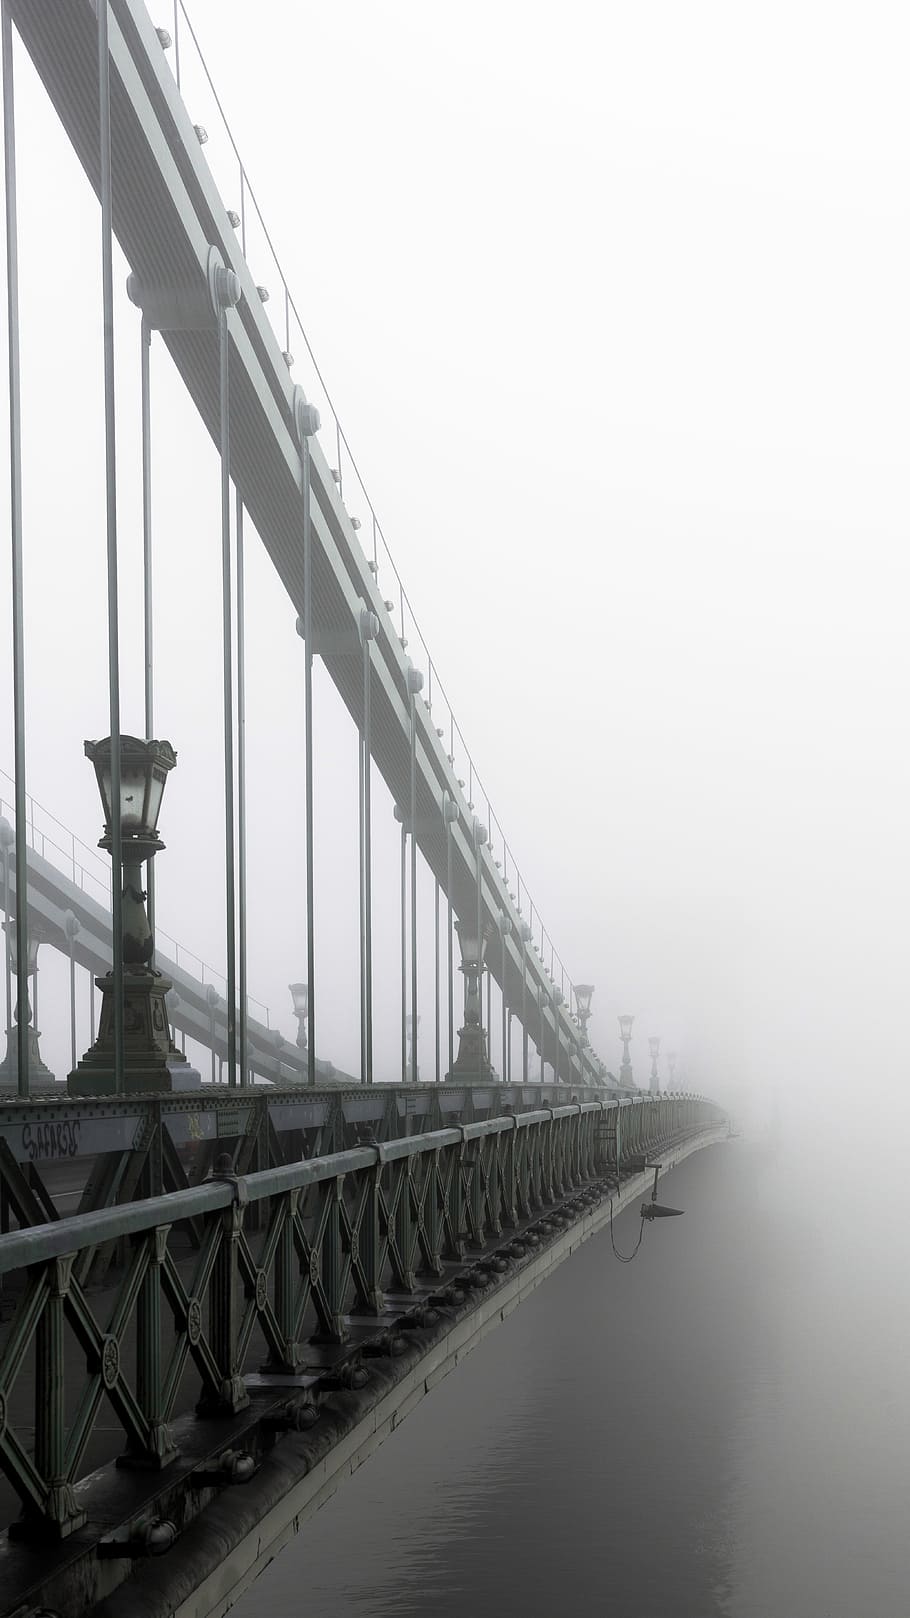 closeup photo of bridge and mist, grayscale photo of suspension bridge